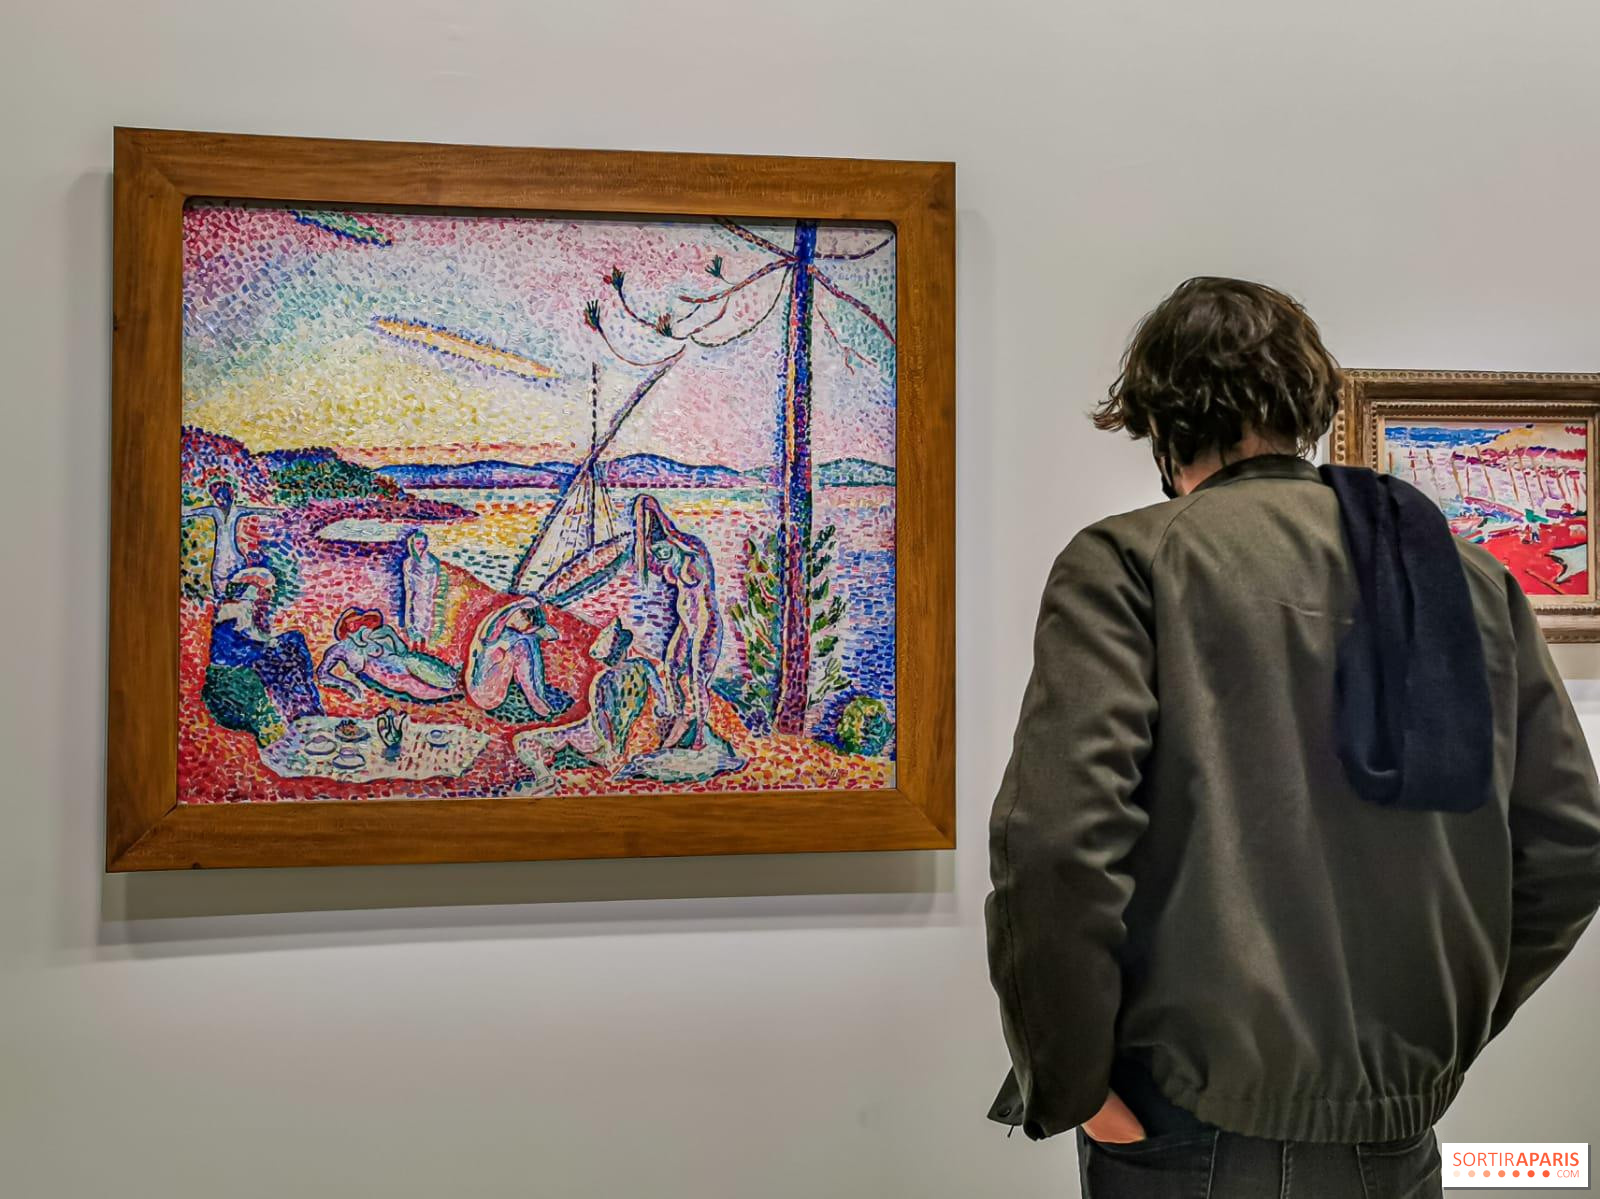 Regulatie Oneindigheid Willen Henri Matisse à Paris : où voir les œuvres du peintre dans la capitale ? -  Sortiraparis.com